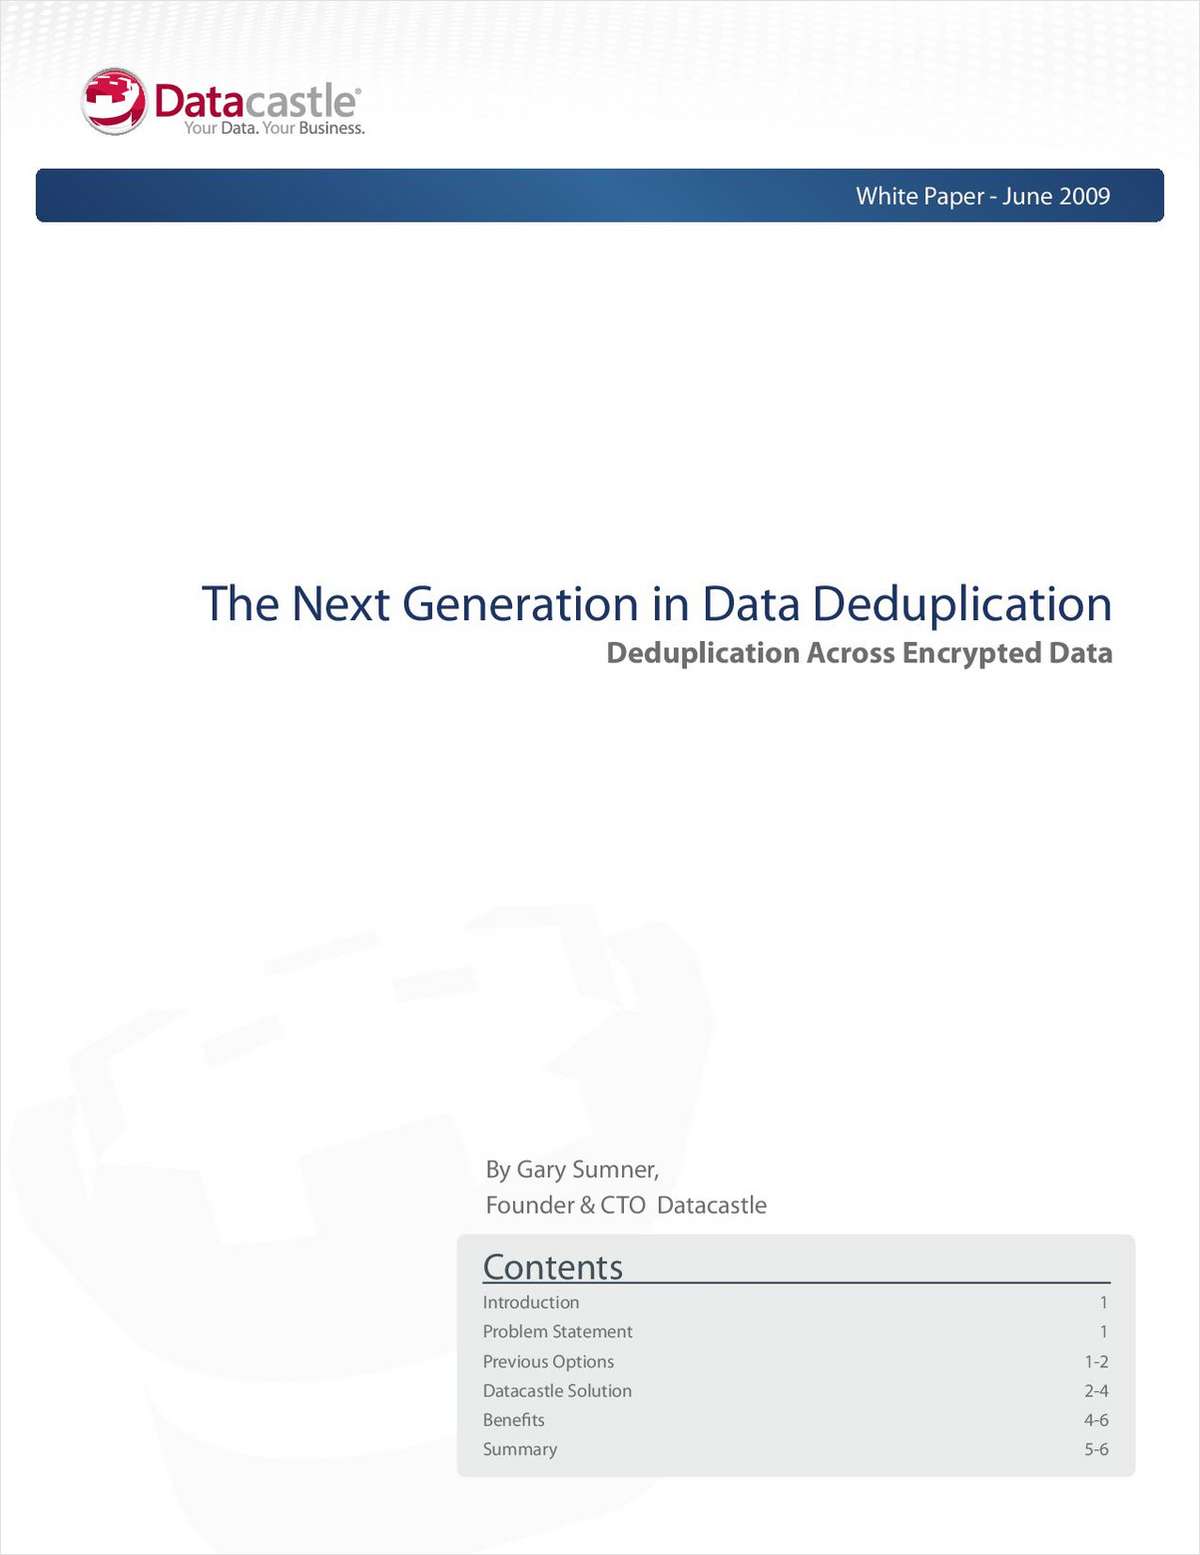 The Next Generation in Data Deduplication - Deduplication Across Encrypted Data